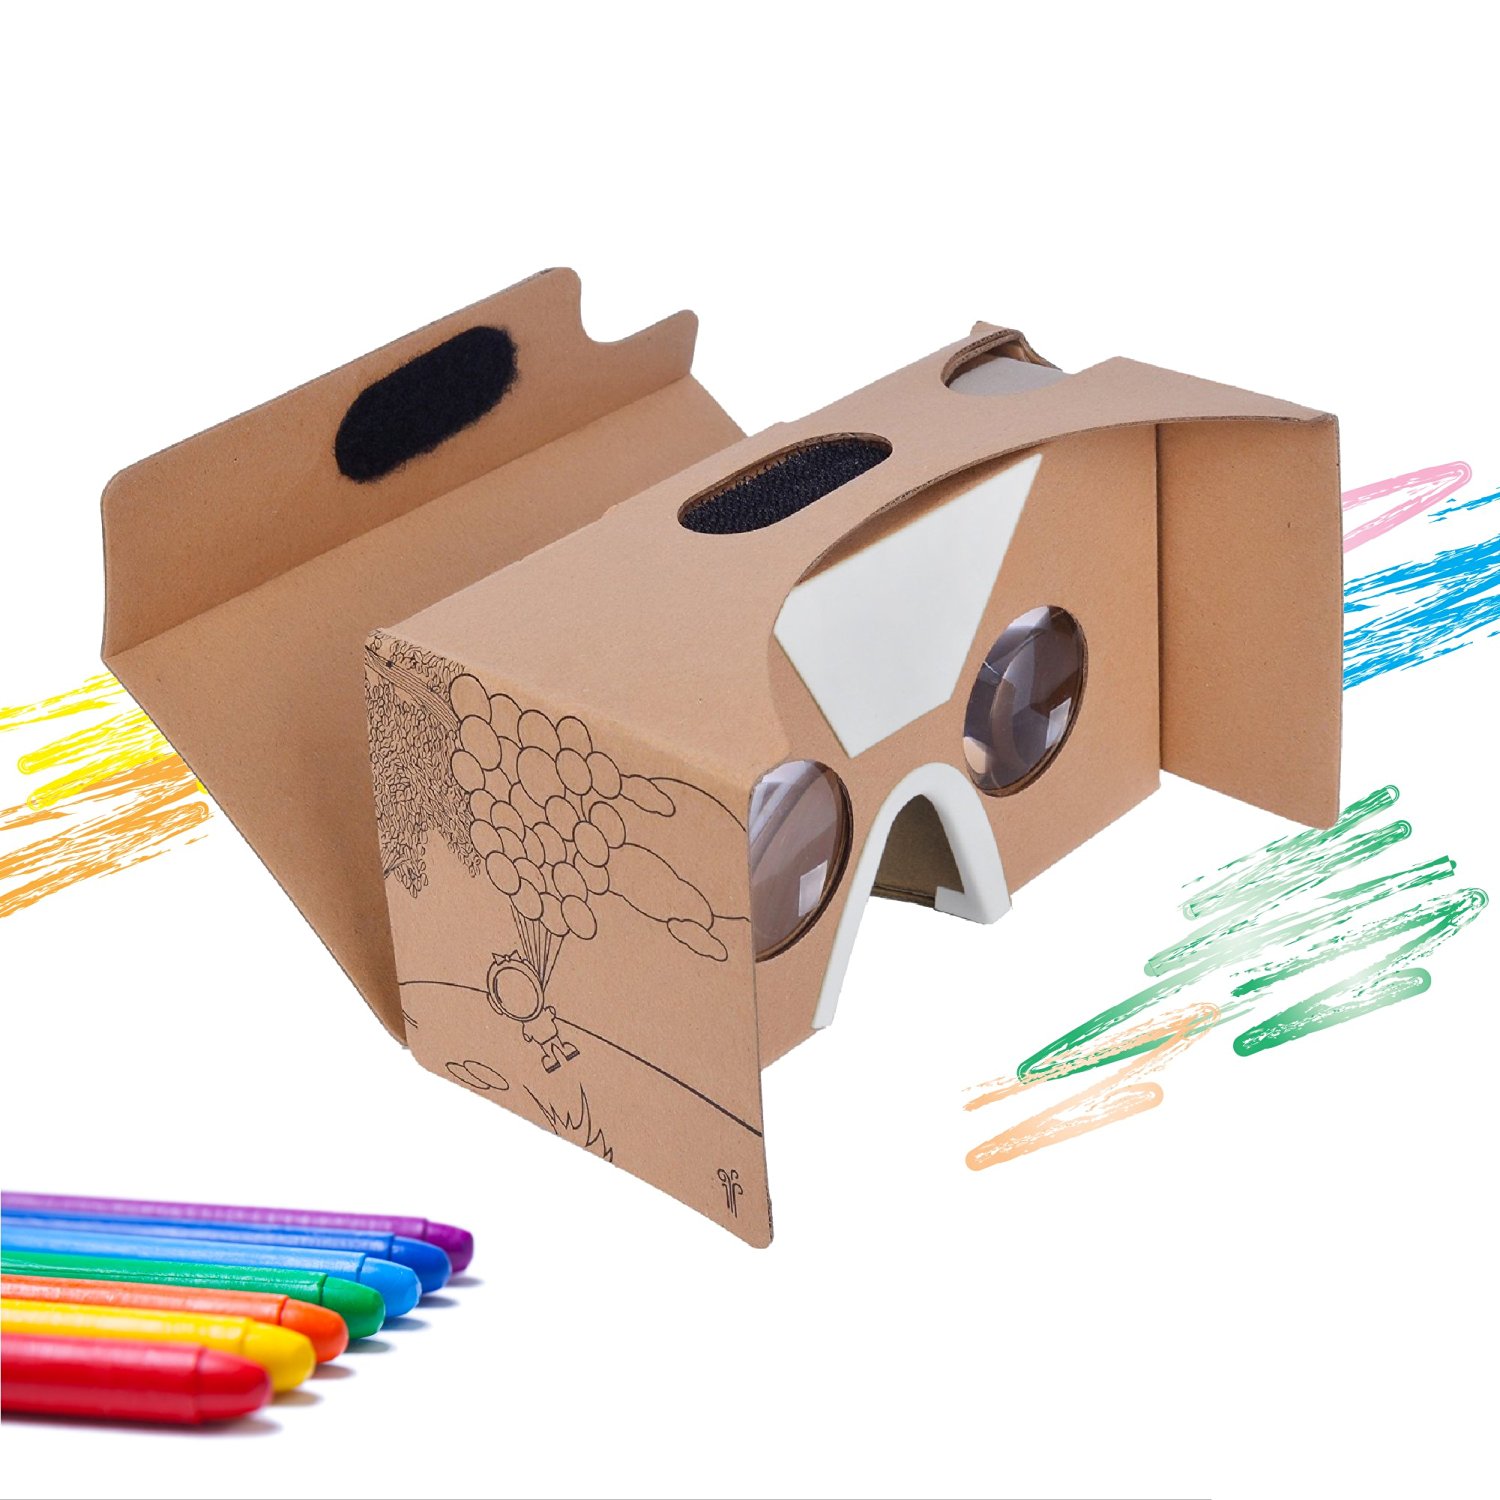 Google-Cardboard-Virtual-Reality-Headset-by-CardboardKid-Amazon-13.95-.jpg